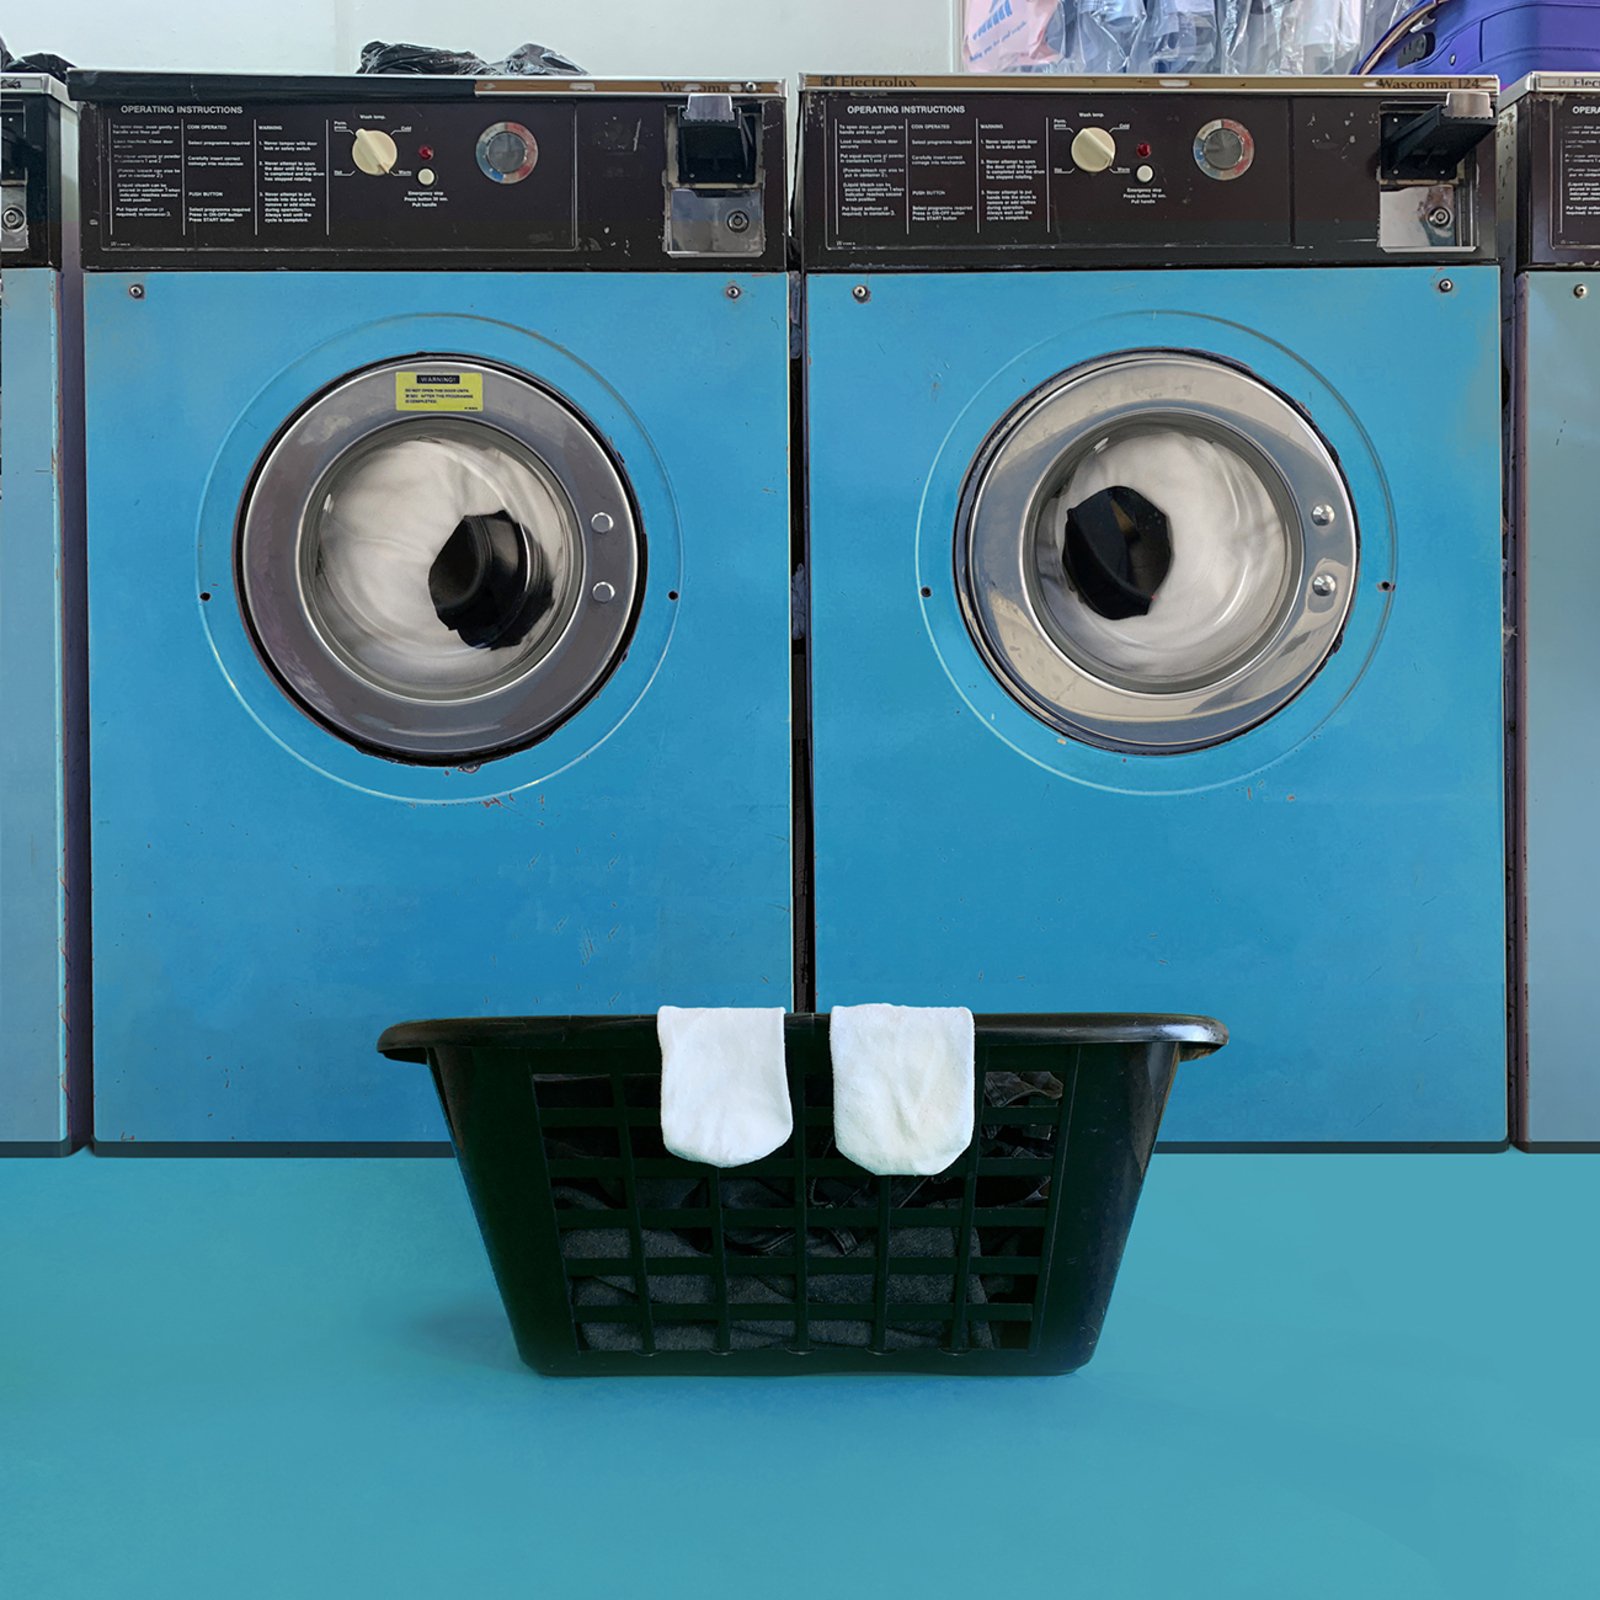 Photography Humor Helga Stentzel Socks Washing Machine Baskets Interior Washing 1600x1600